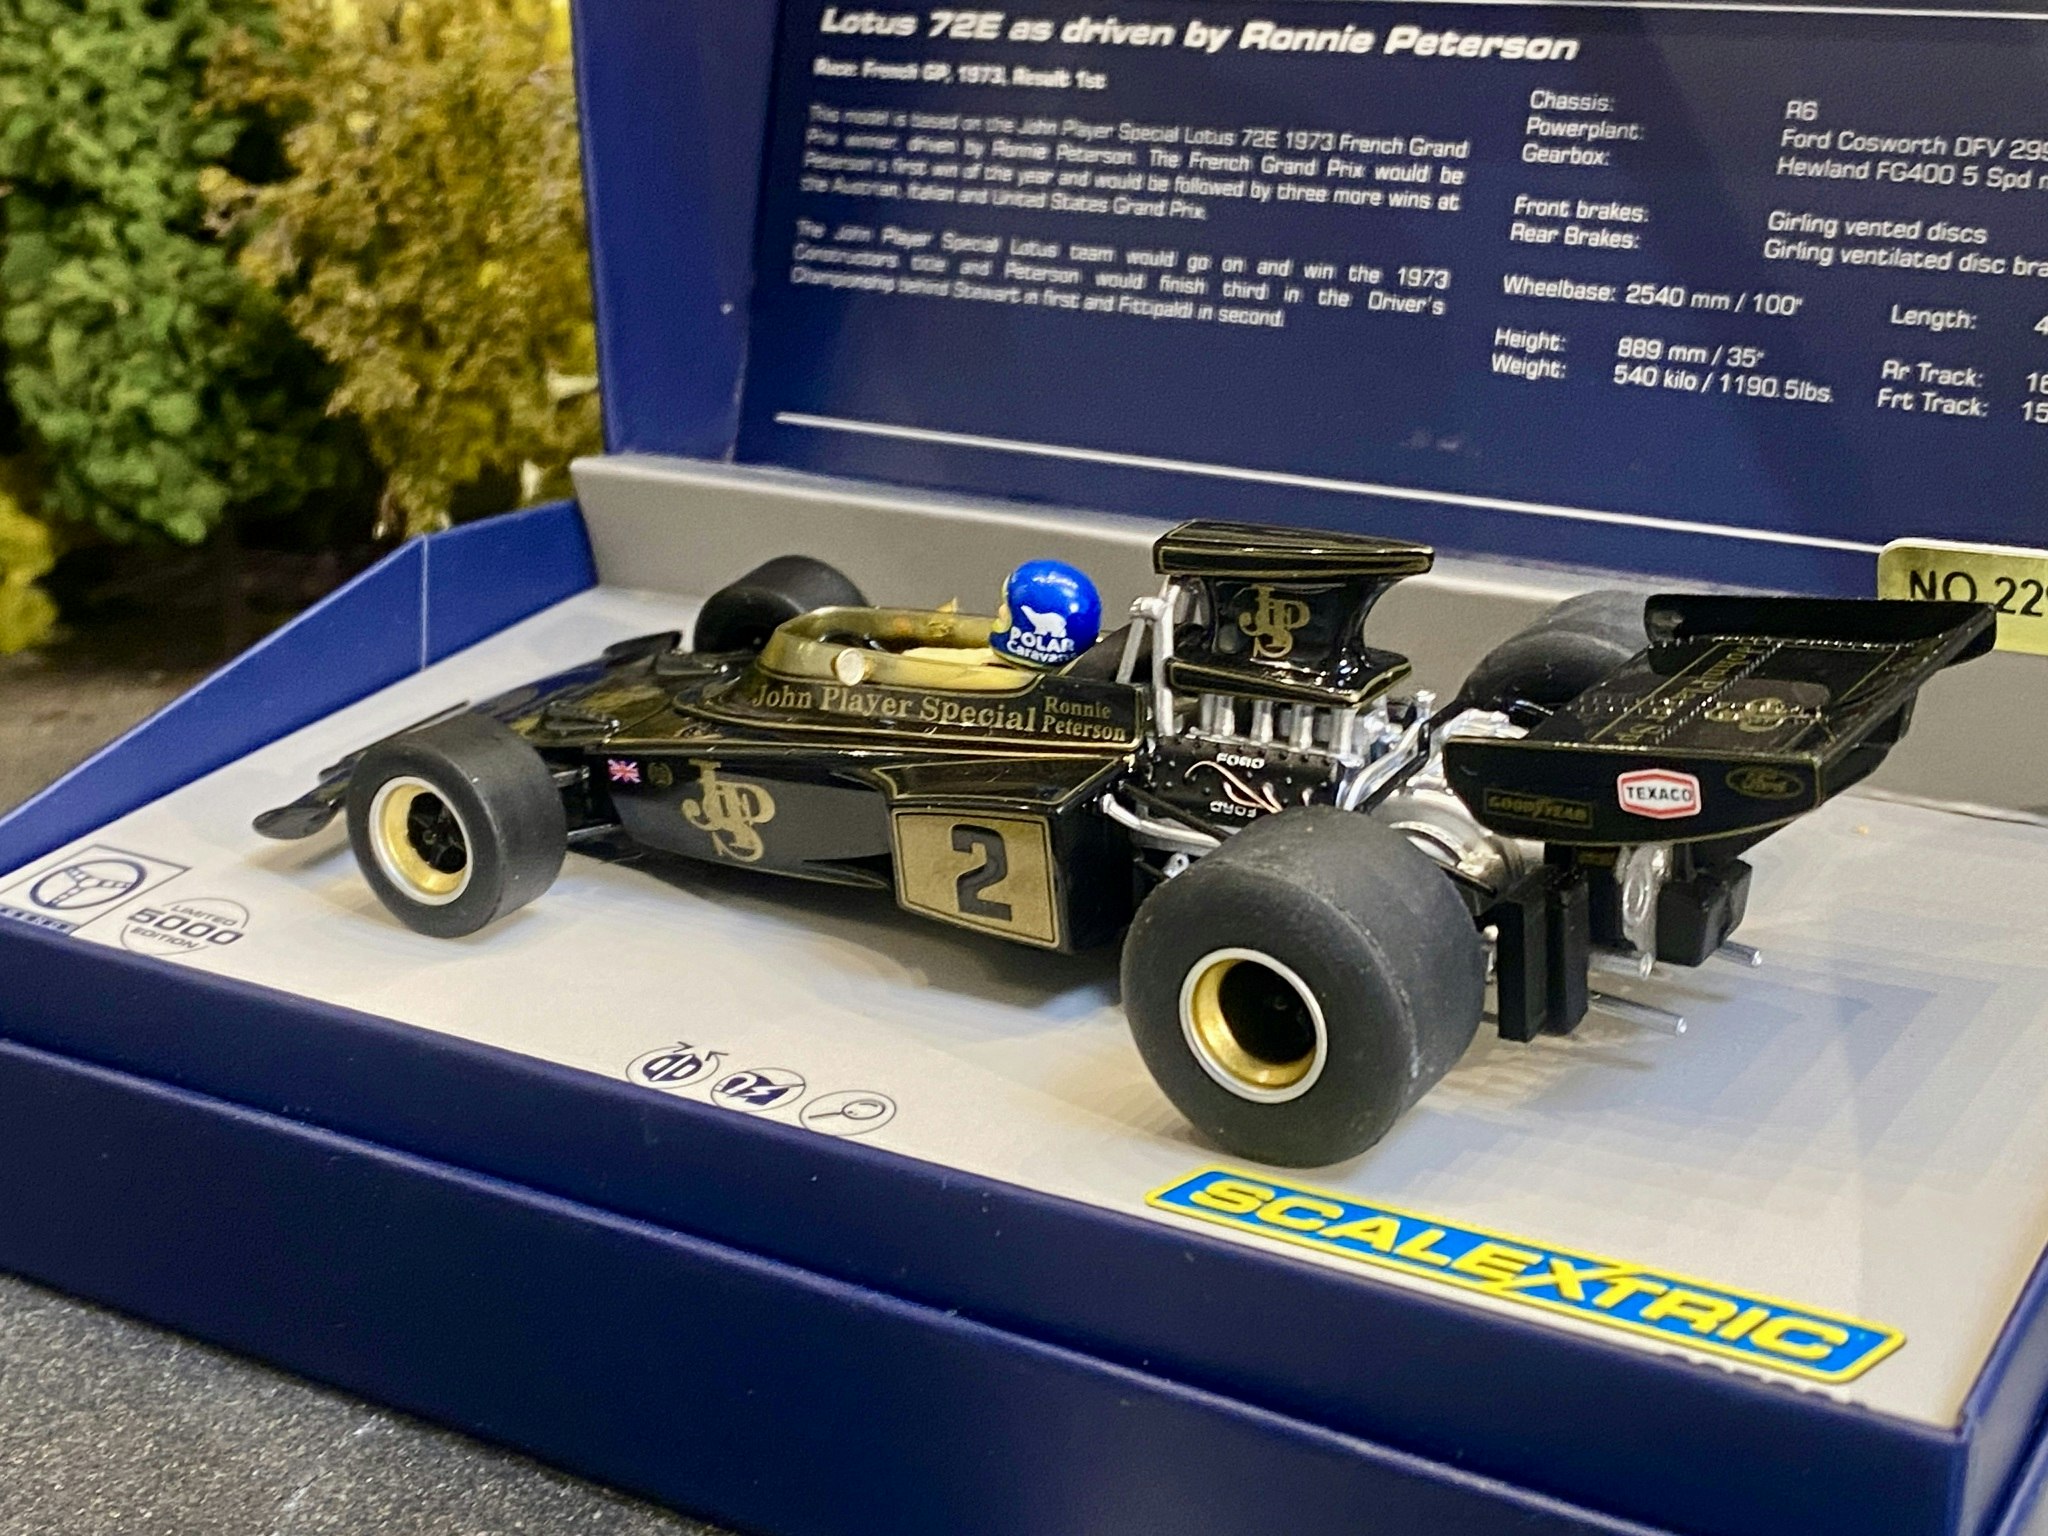 Skala 1/32 An. Slotcar - Legends Lotus 72E, Ronnie Peterson fr Scalextric